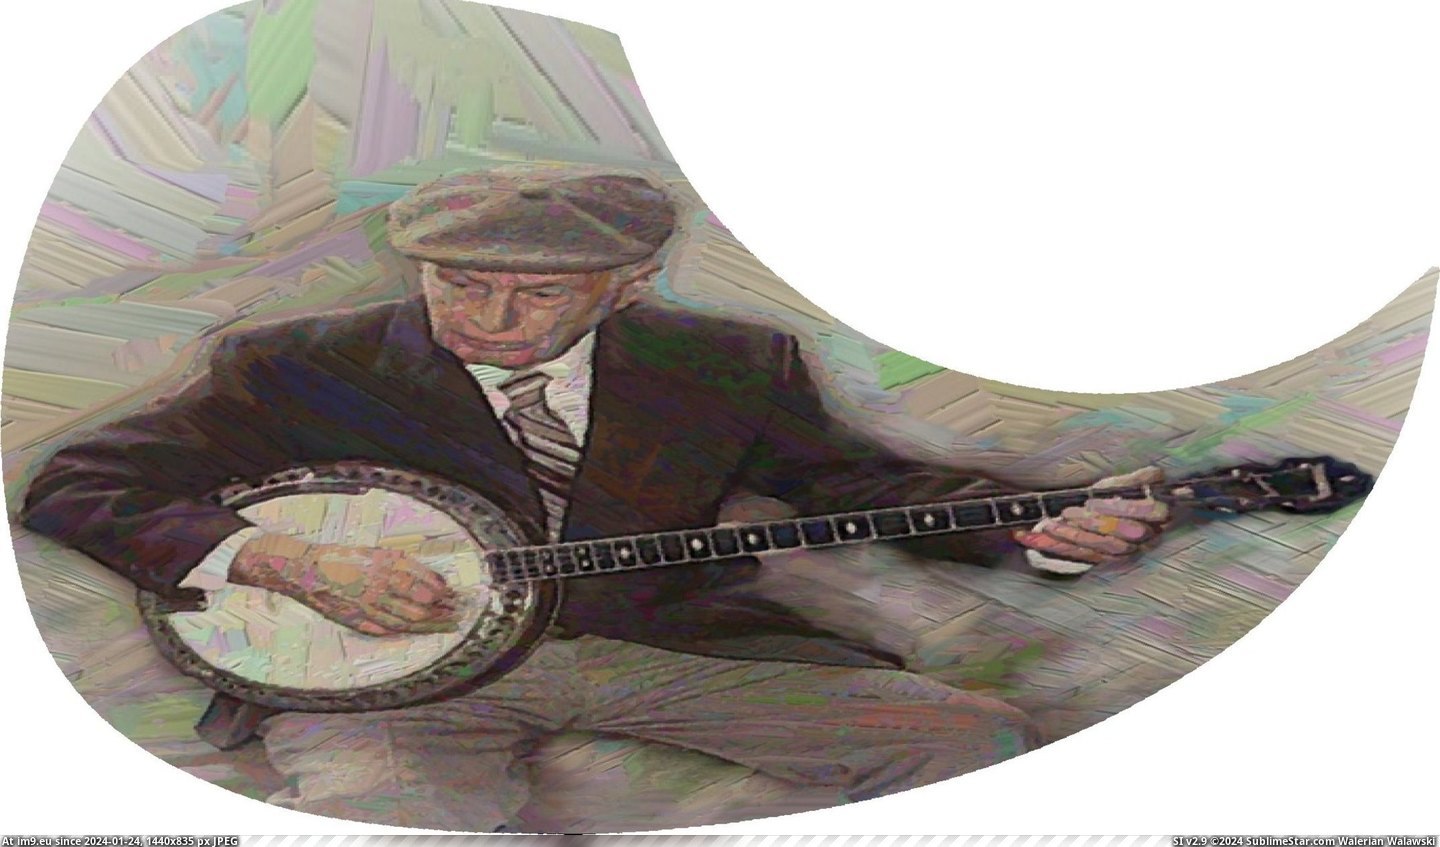 #Old #Pick #Banjo #Guard #Player Pick Guard - Old Banjo Player Pic. (Изображение из альбом Custom Pickguard Art))